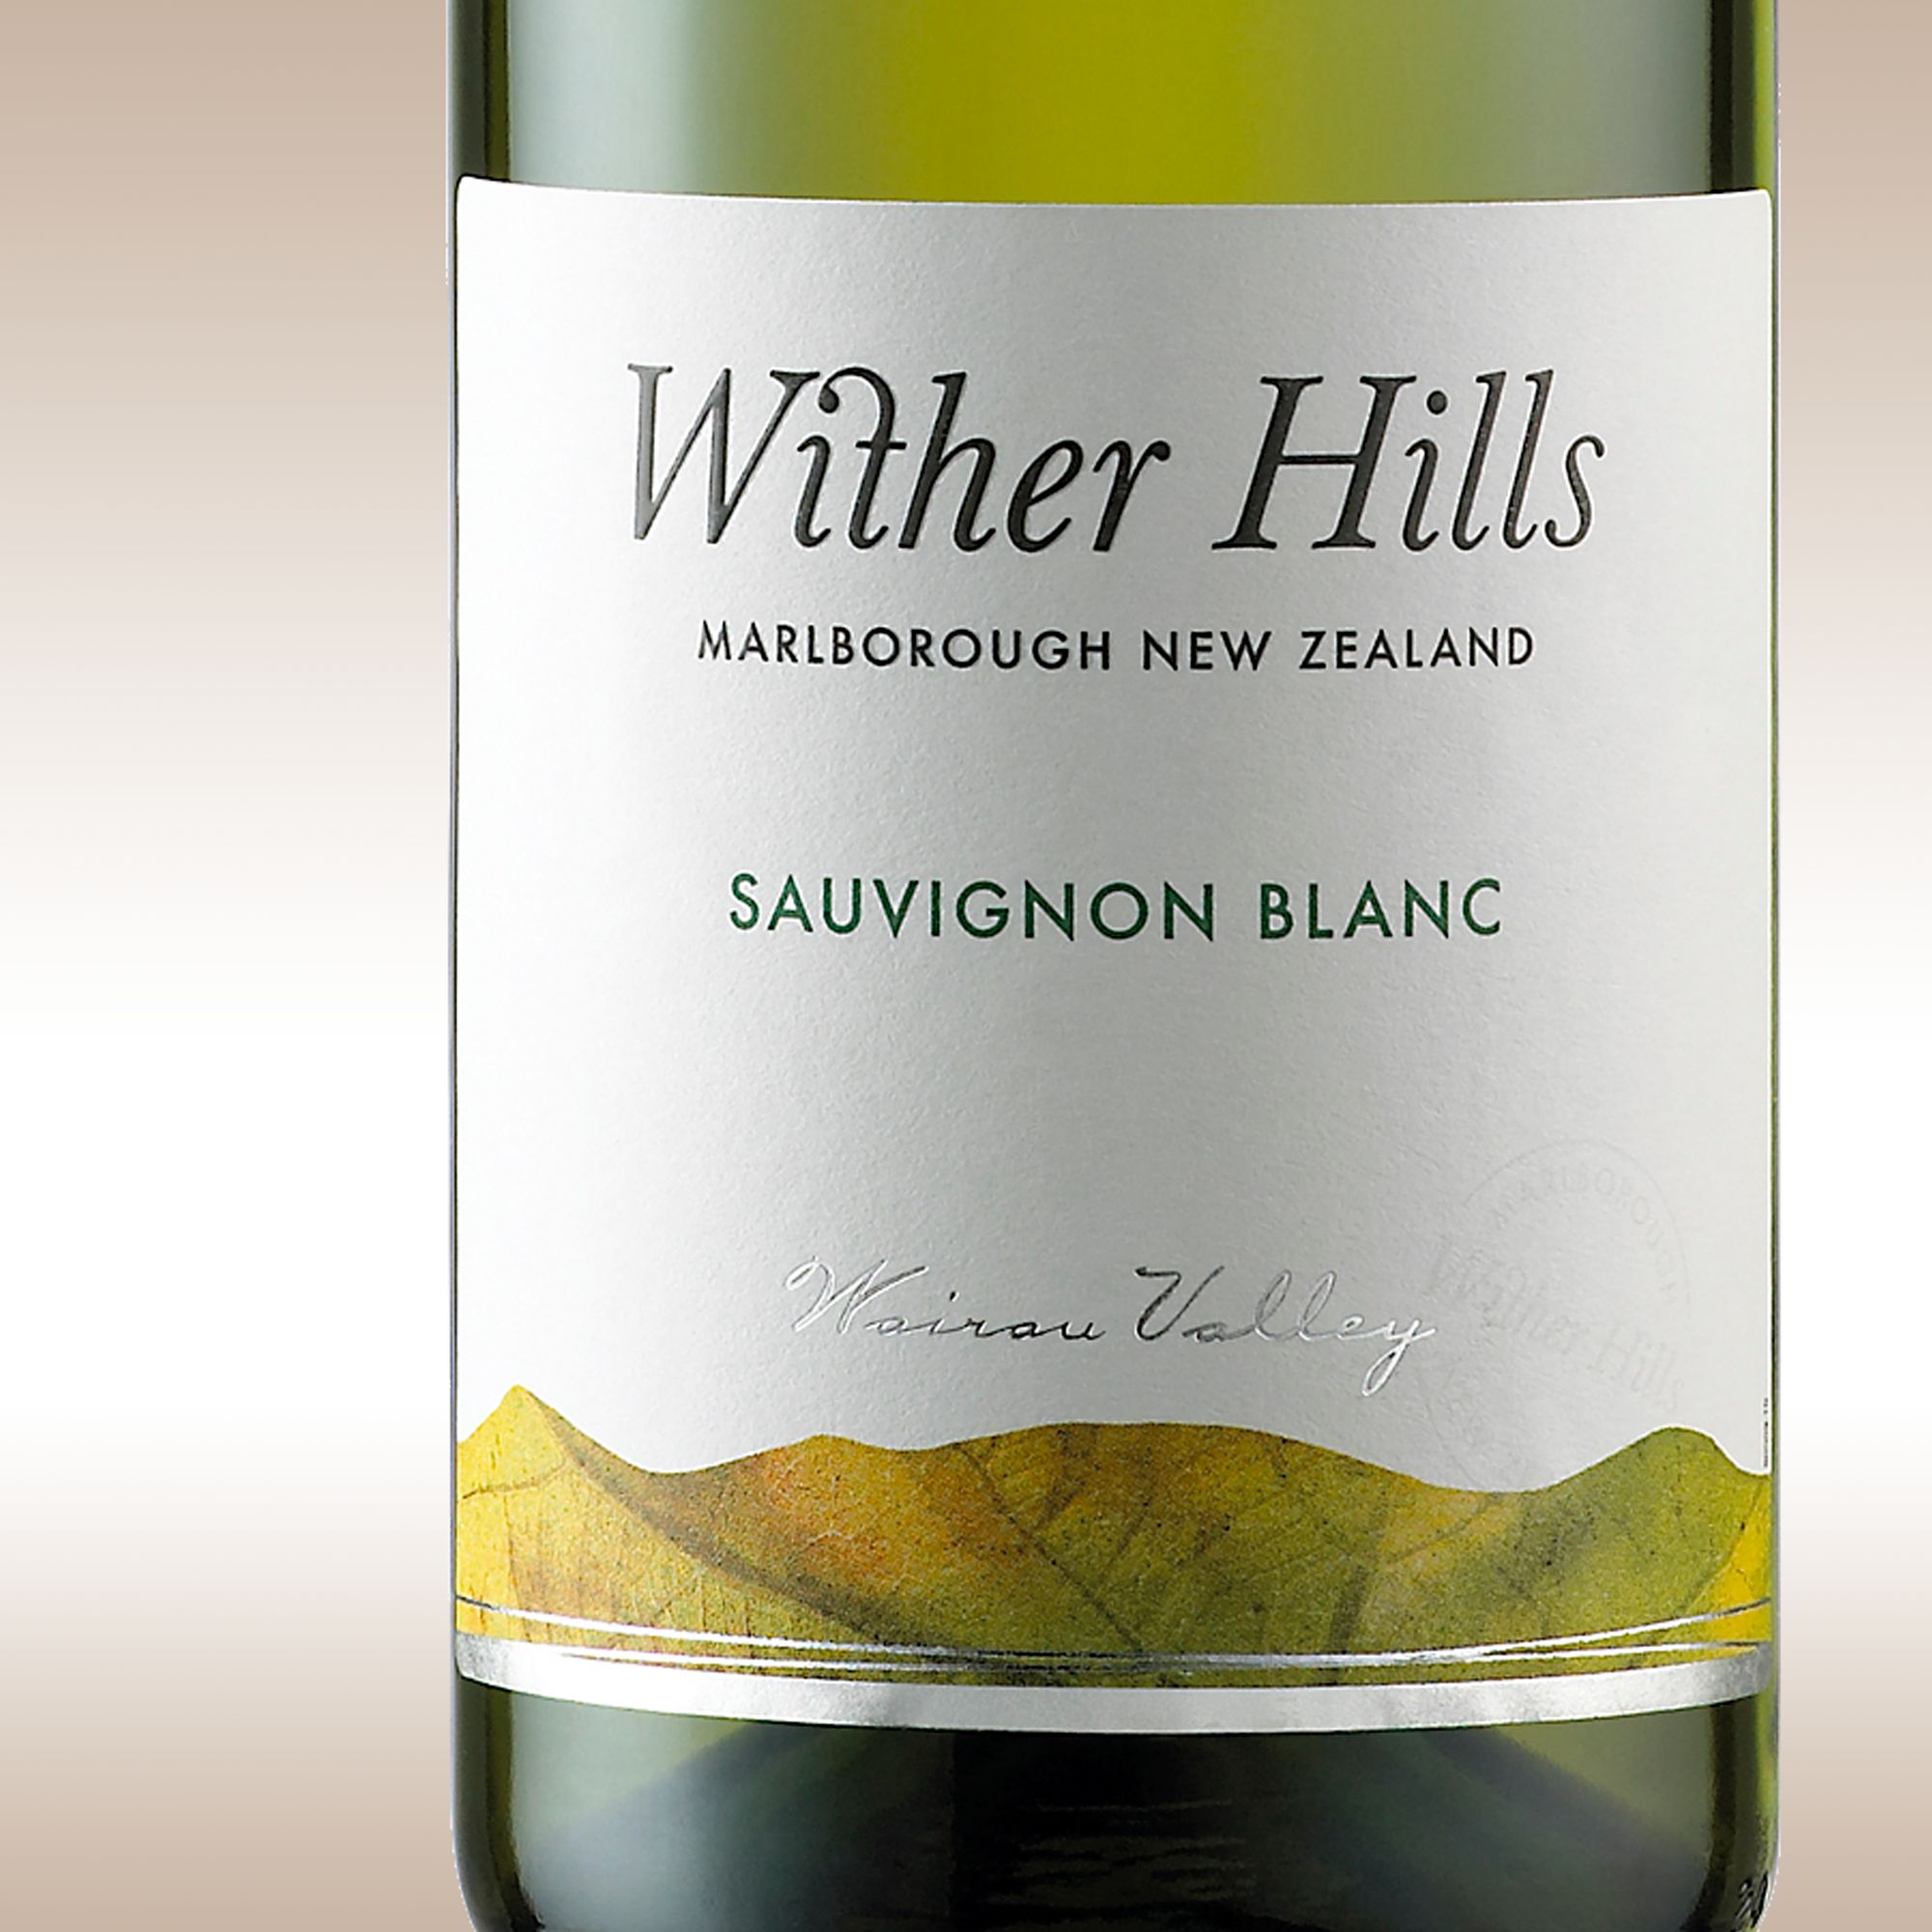 Wither Hills Sauvignon Blanc 2008 Marlborough, New Zealand